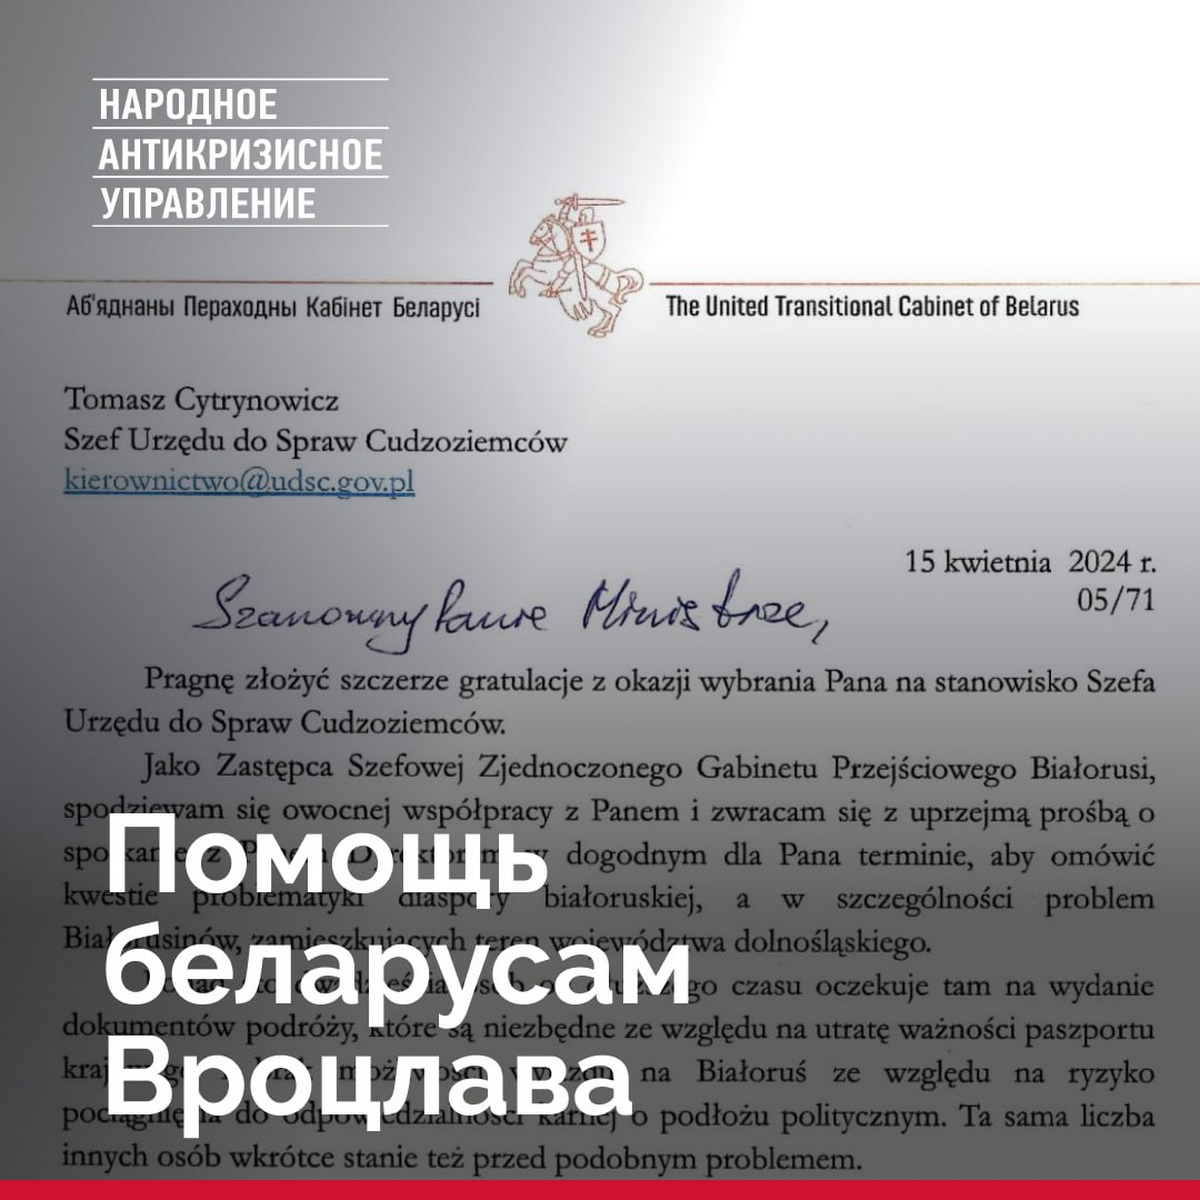 НАУ работает над разрешением проблем легализации беларусов во Вроцлаве